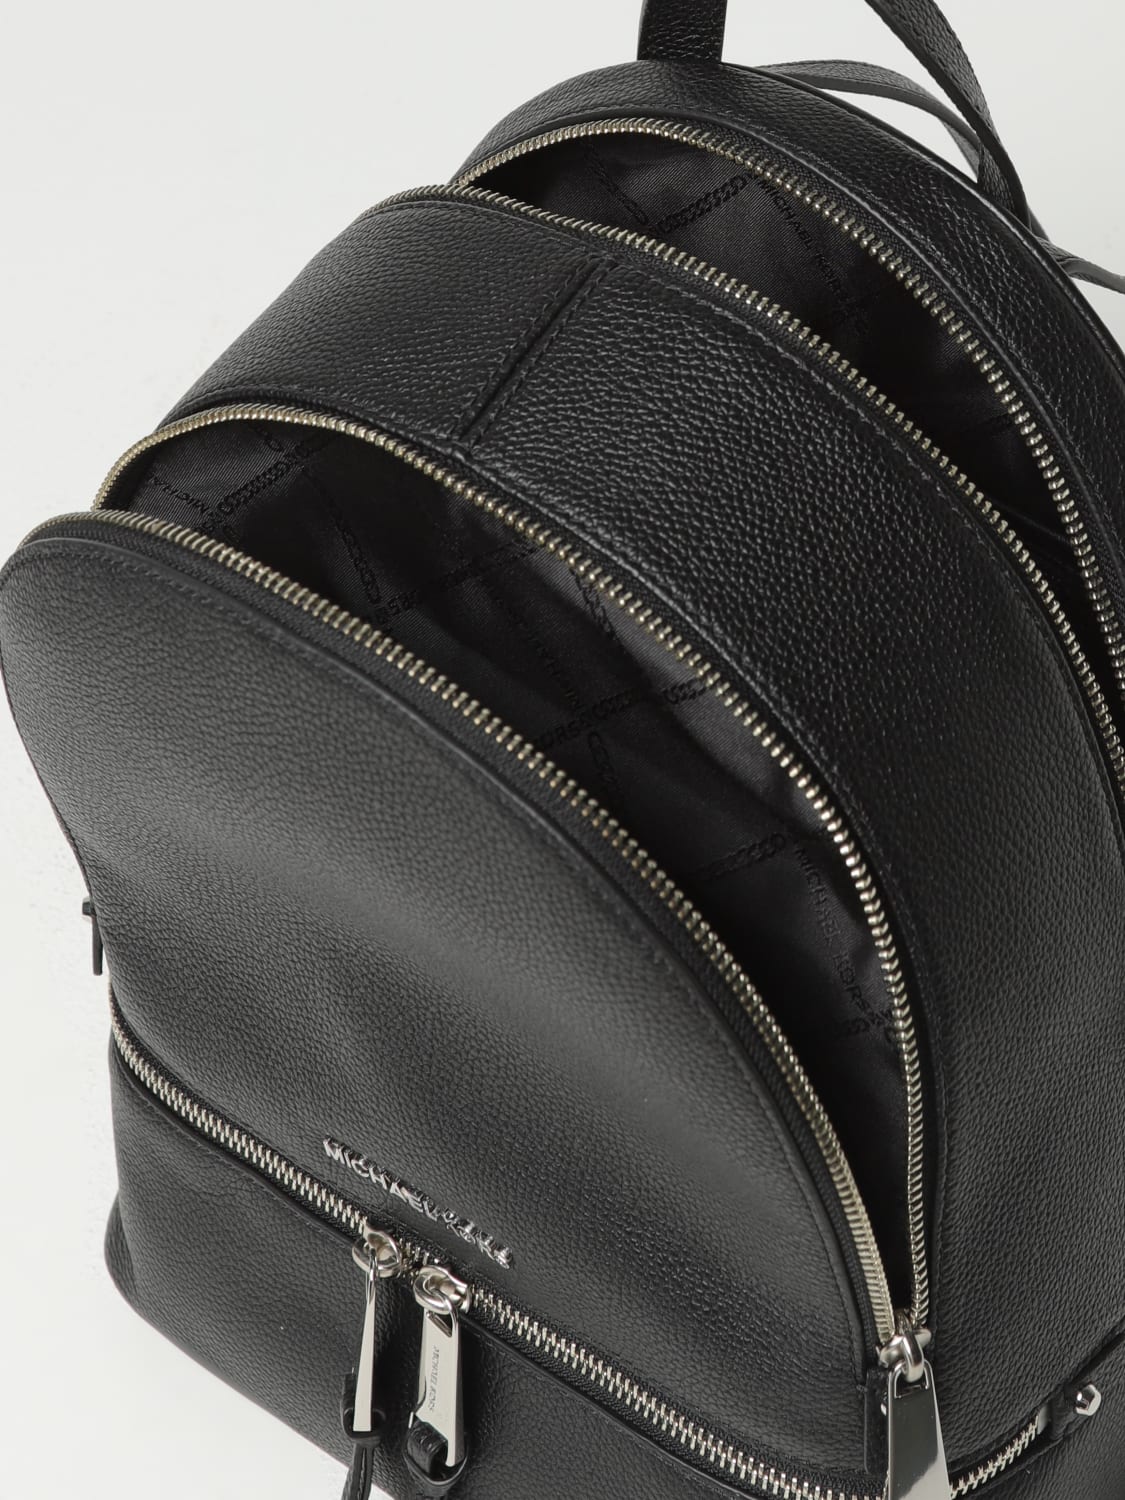 MICHAEL KORS: backpack for woman - Black